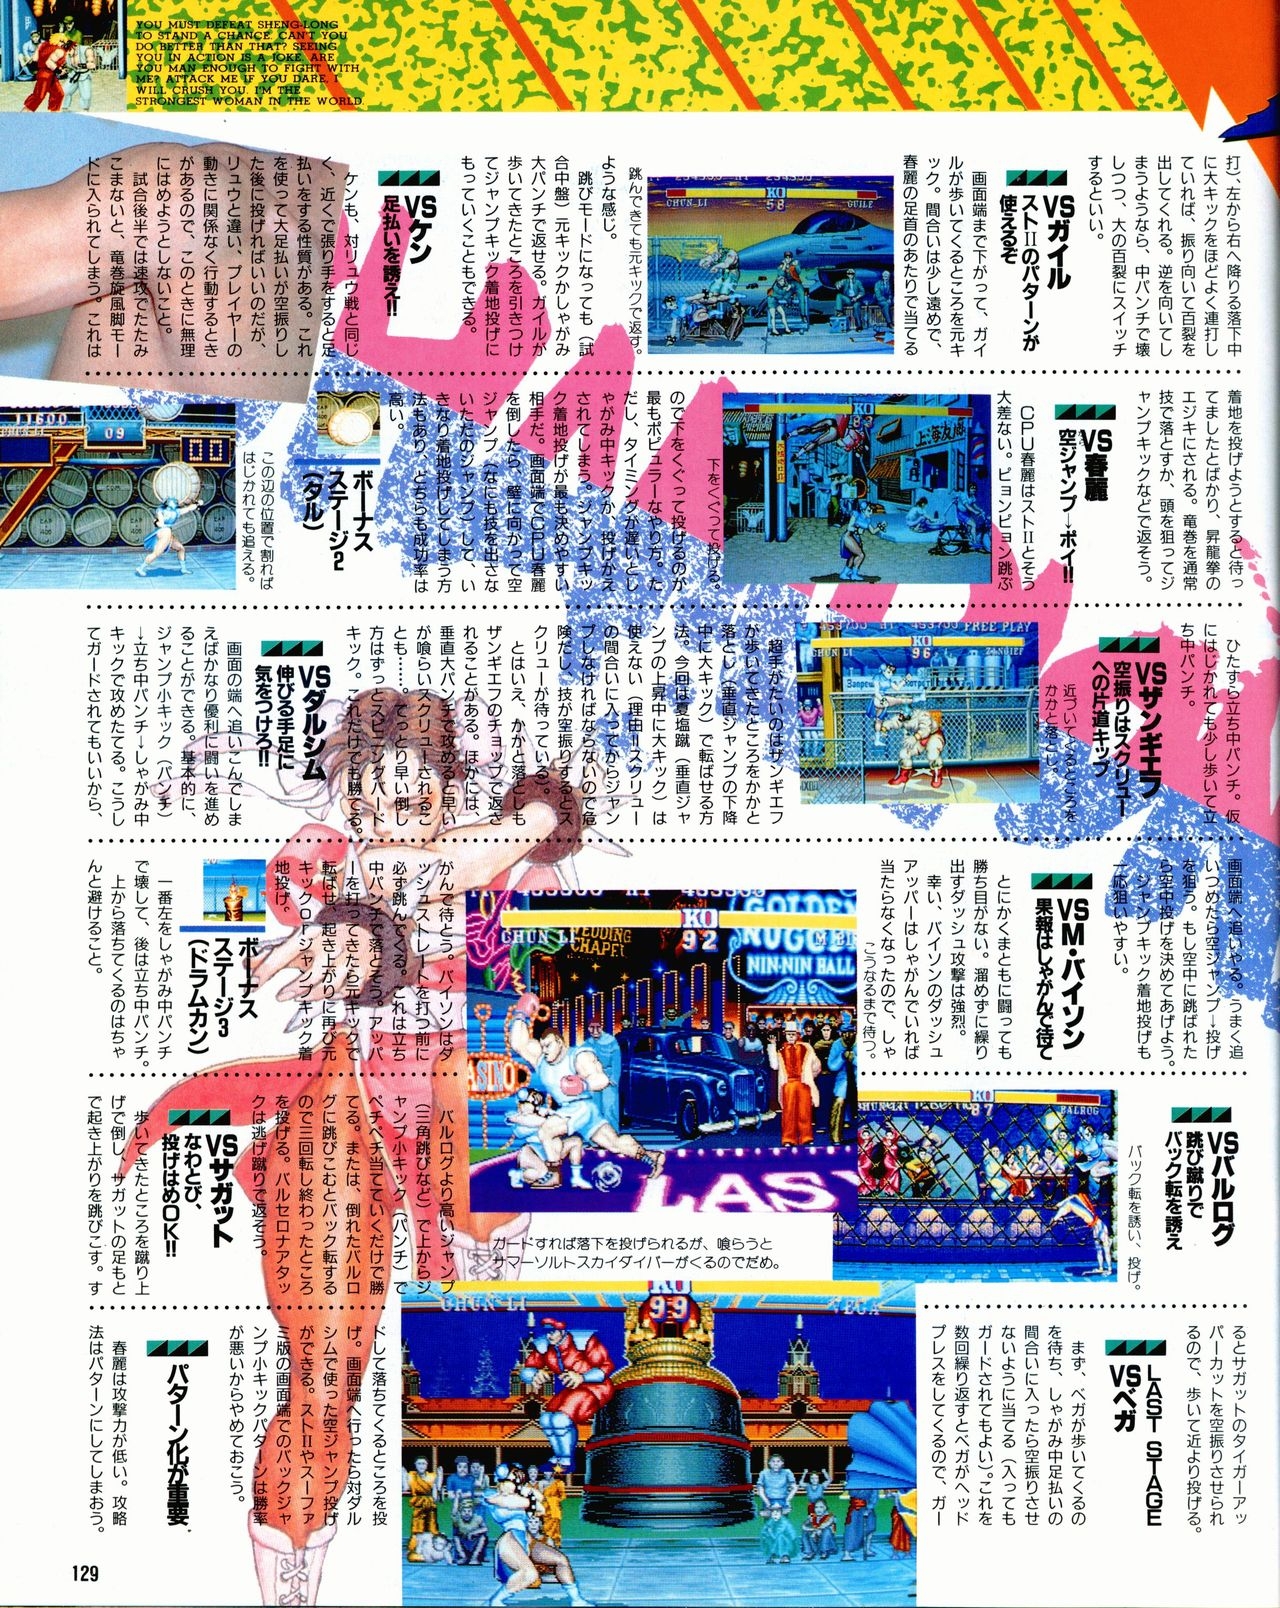 Street Fighter II Dash - Gamest special issue 77 130